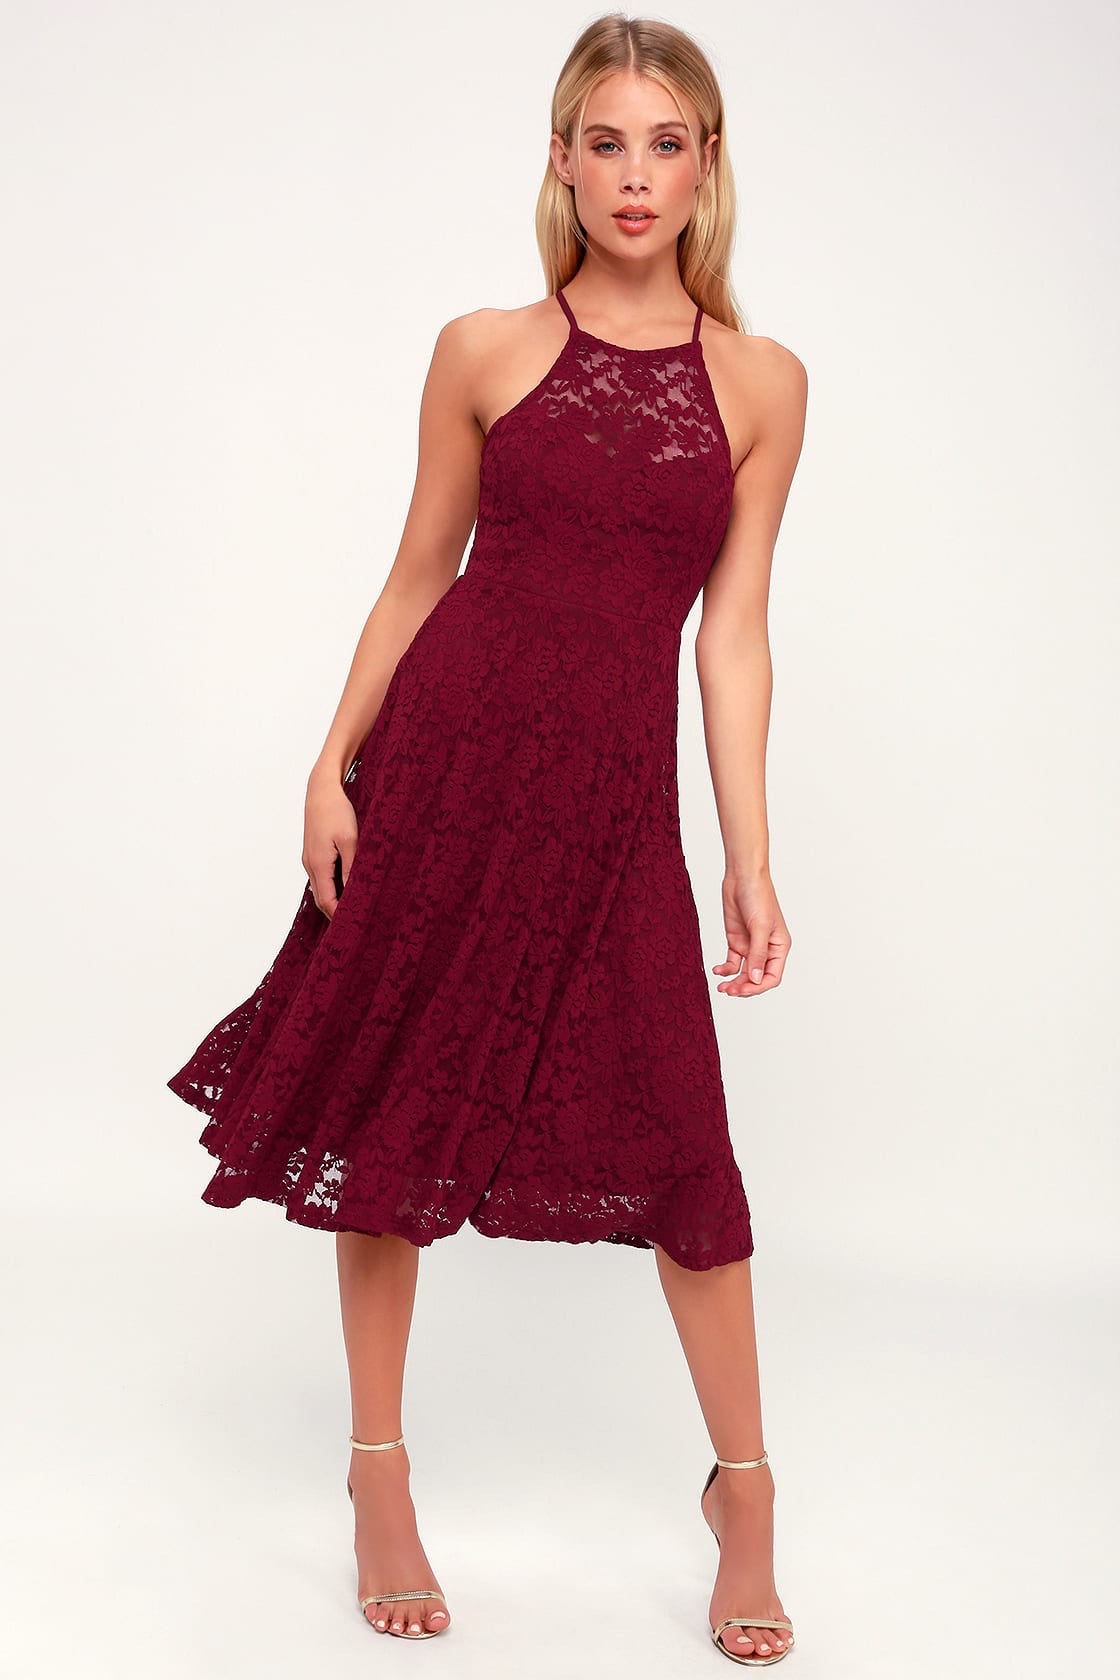 Pretty Burgundy semi formal lace dress. 4 60+ Most Fashionable Semi Formal Wedding Dresses for Female Guests - 27